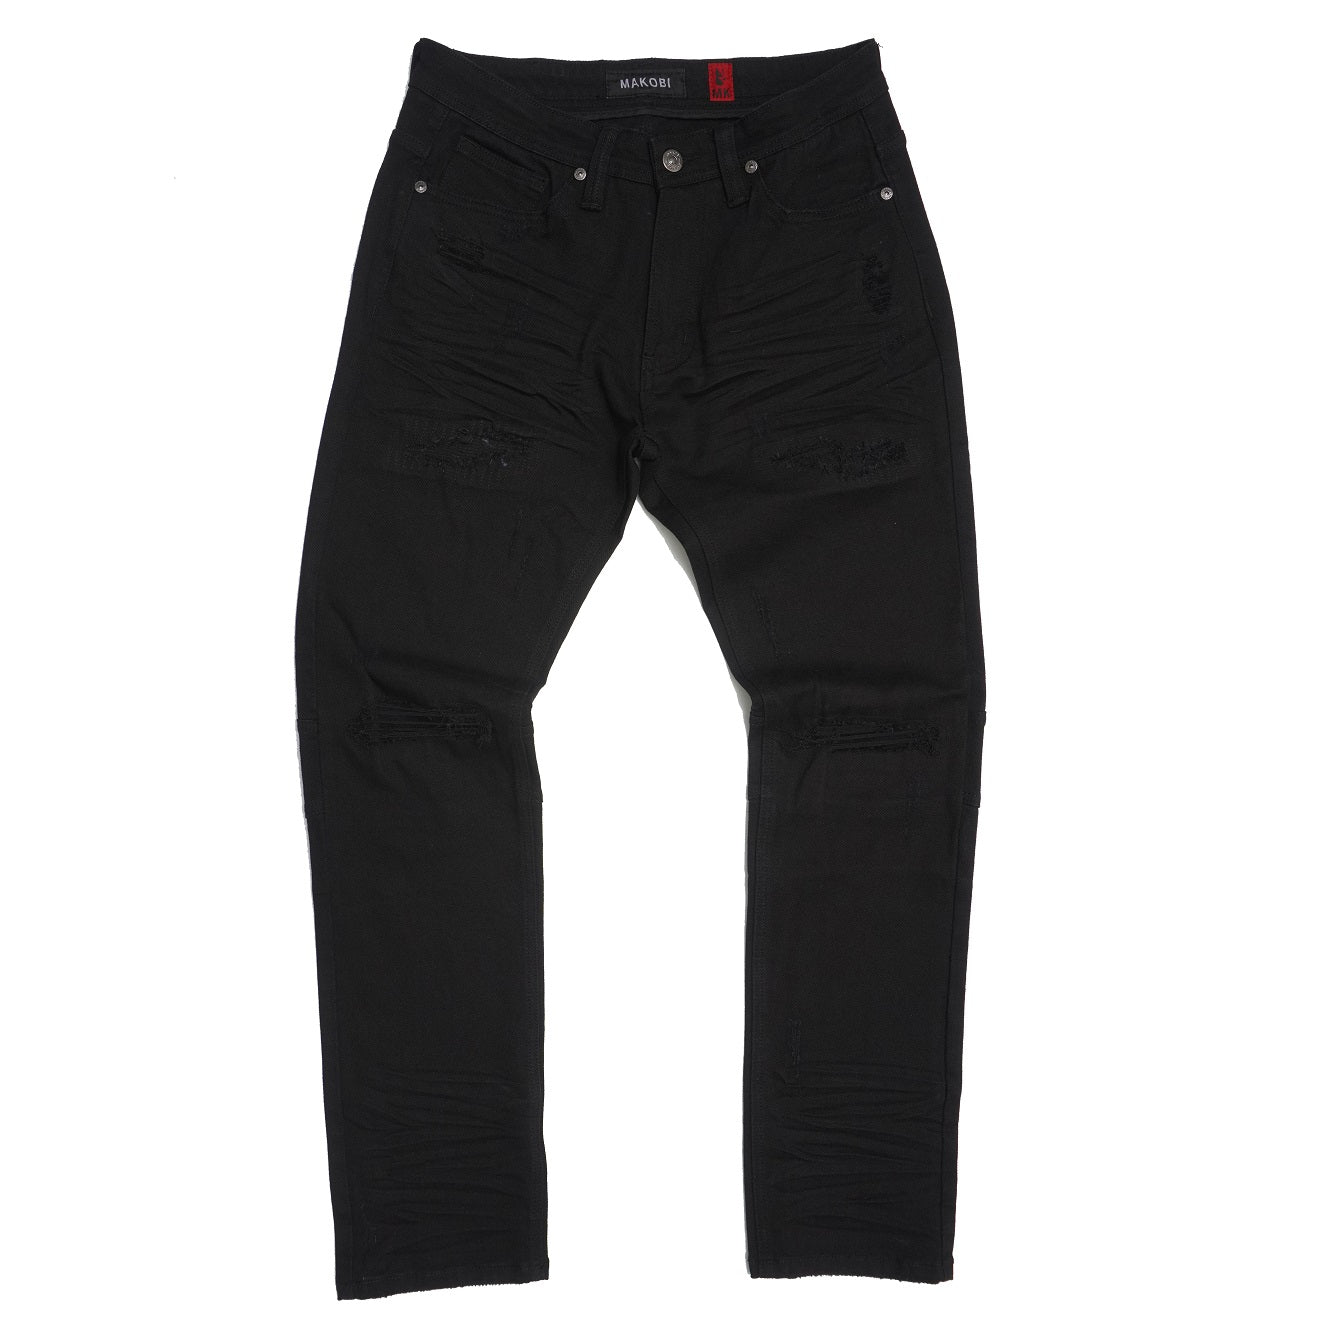 M1911 Rona Shredded Jeans - Black